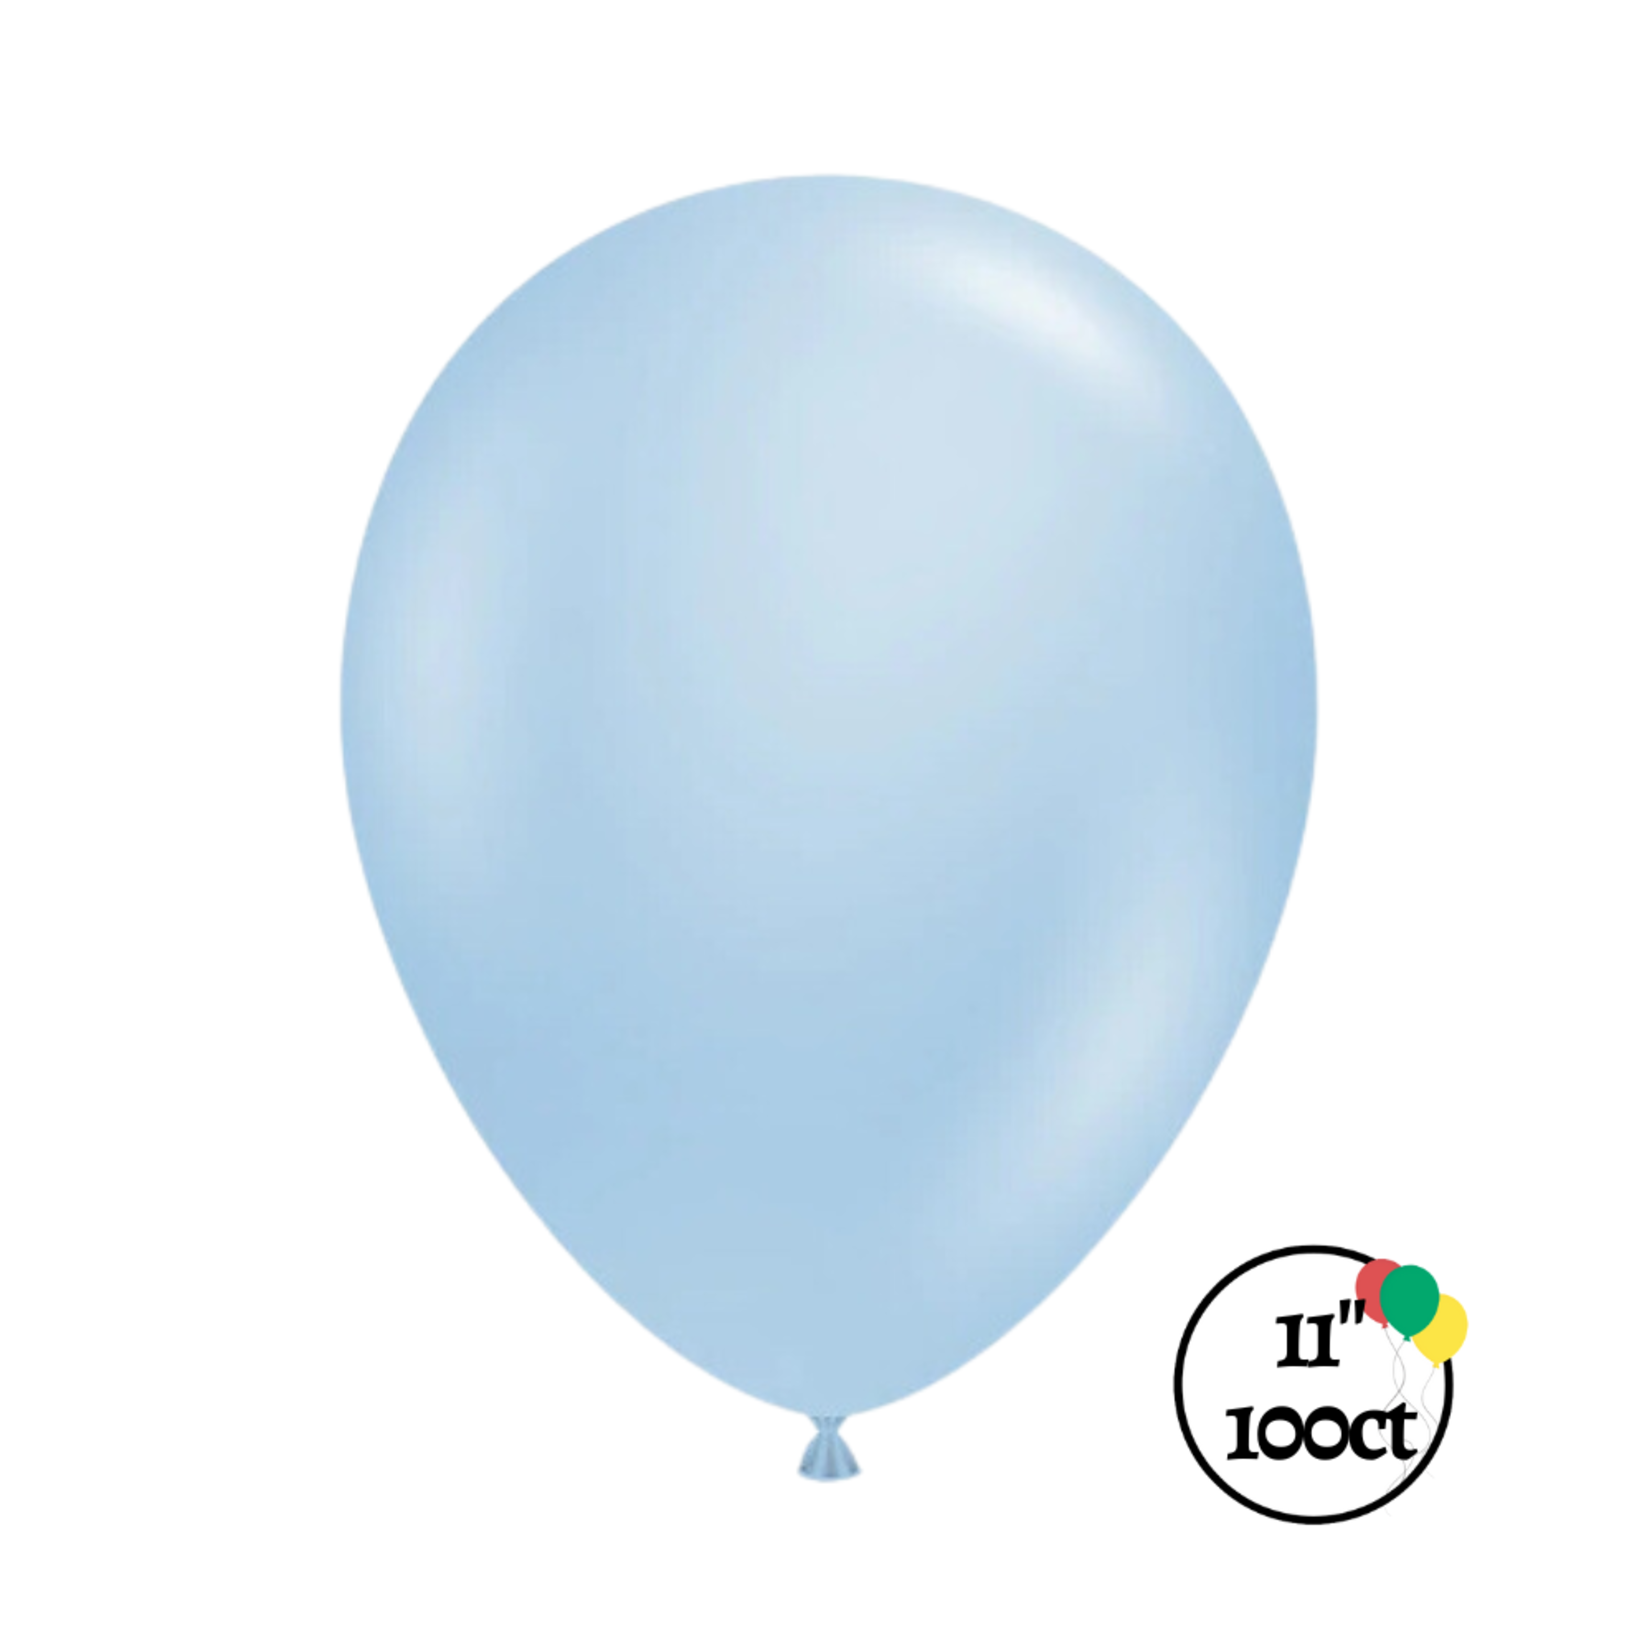 Tuftex 11" Tuftex Metallic Sky Blue Balloons 100ct